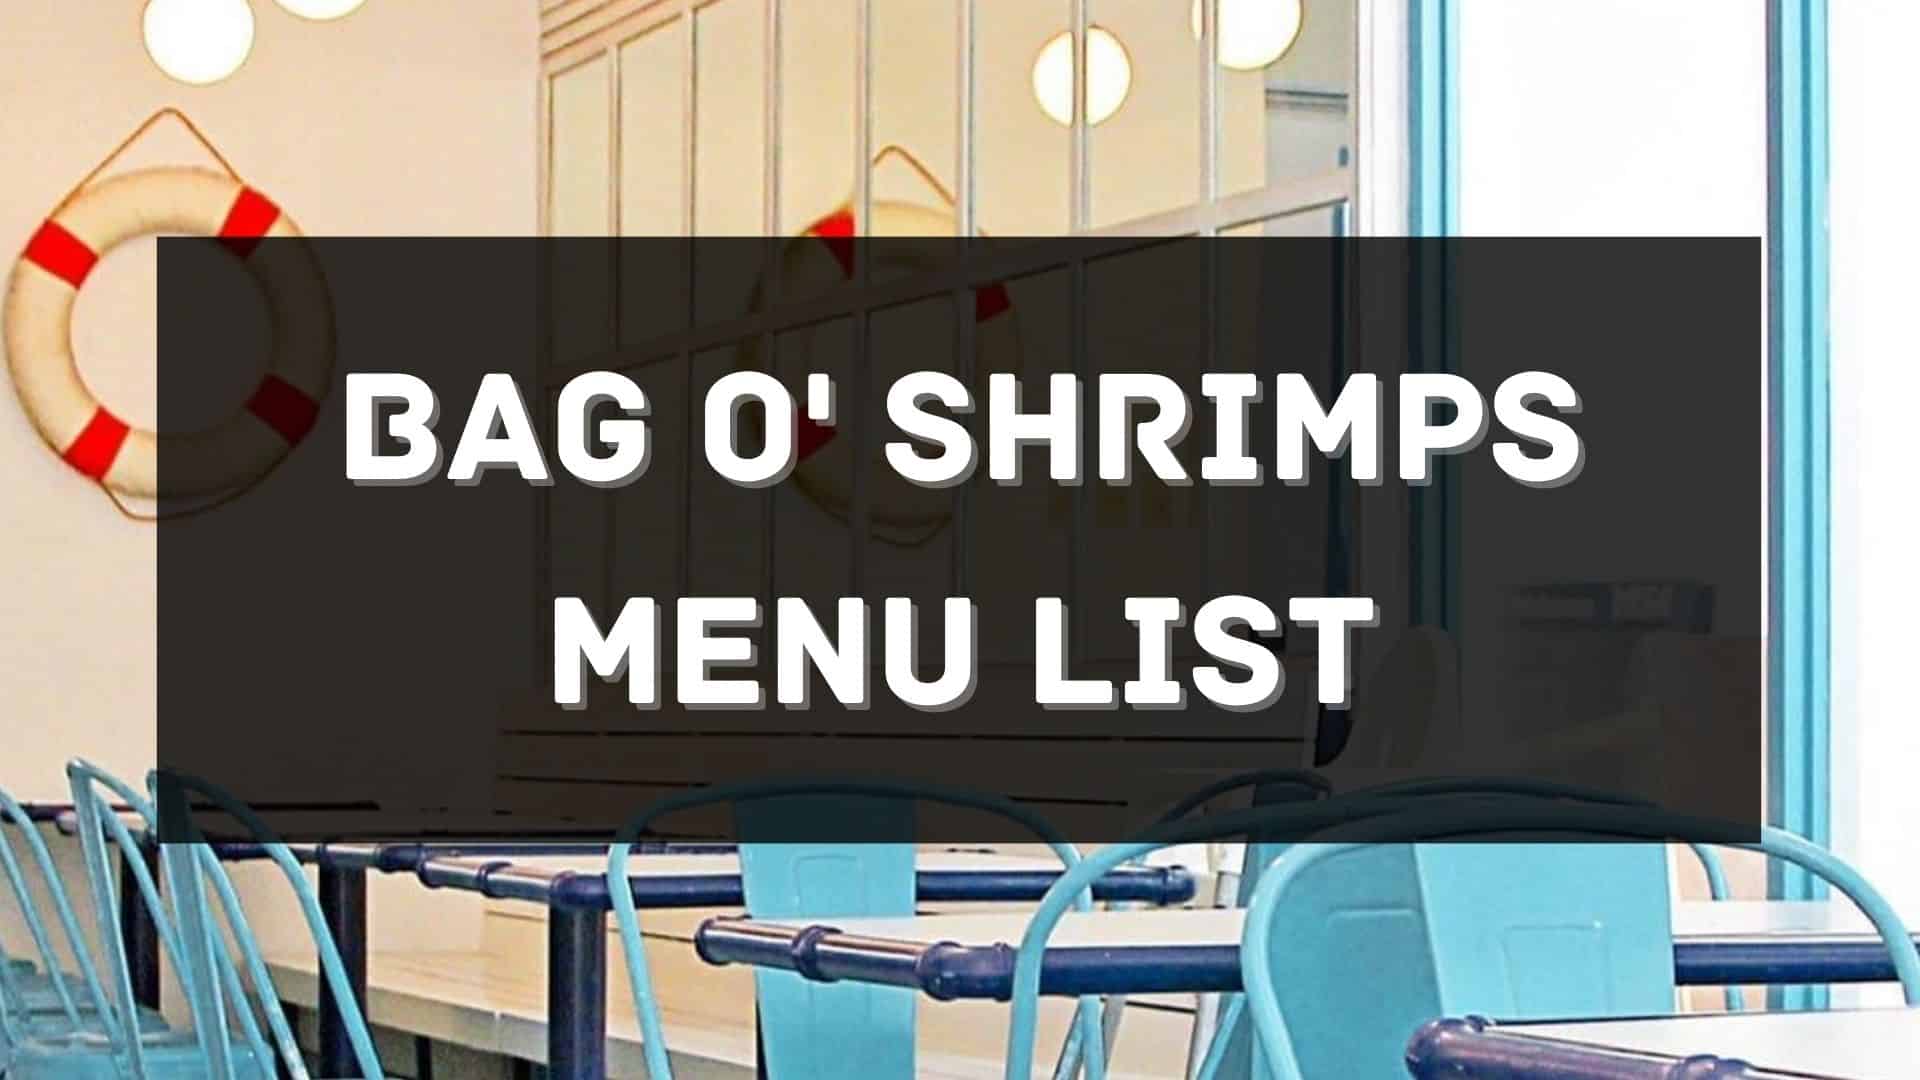 bag o' shrimps menu prices philippines